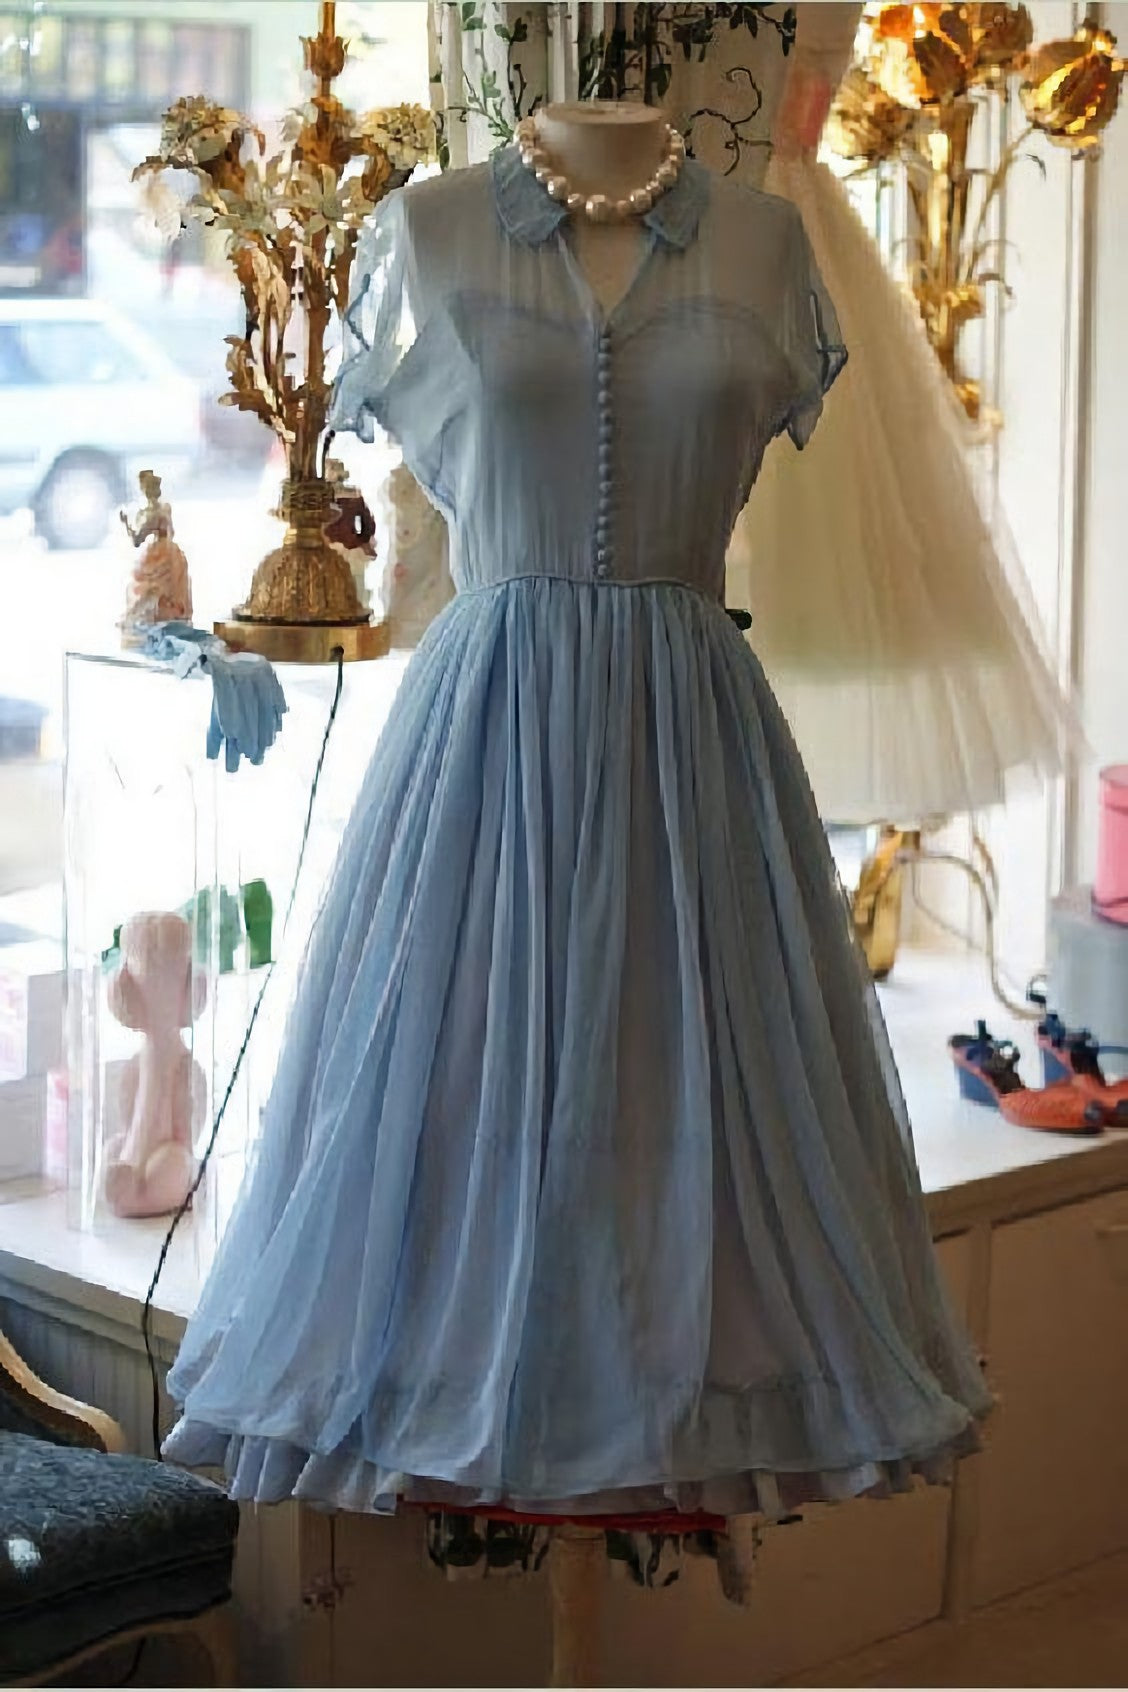 Homecomming Dresses Floral, Light Dresses, Chiffon Elegant A Line Doll Collar Short Sleeves Homecoming Blue Chiffon Vintage Style Dress